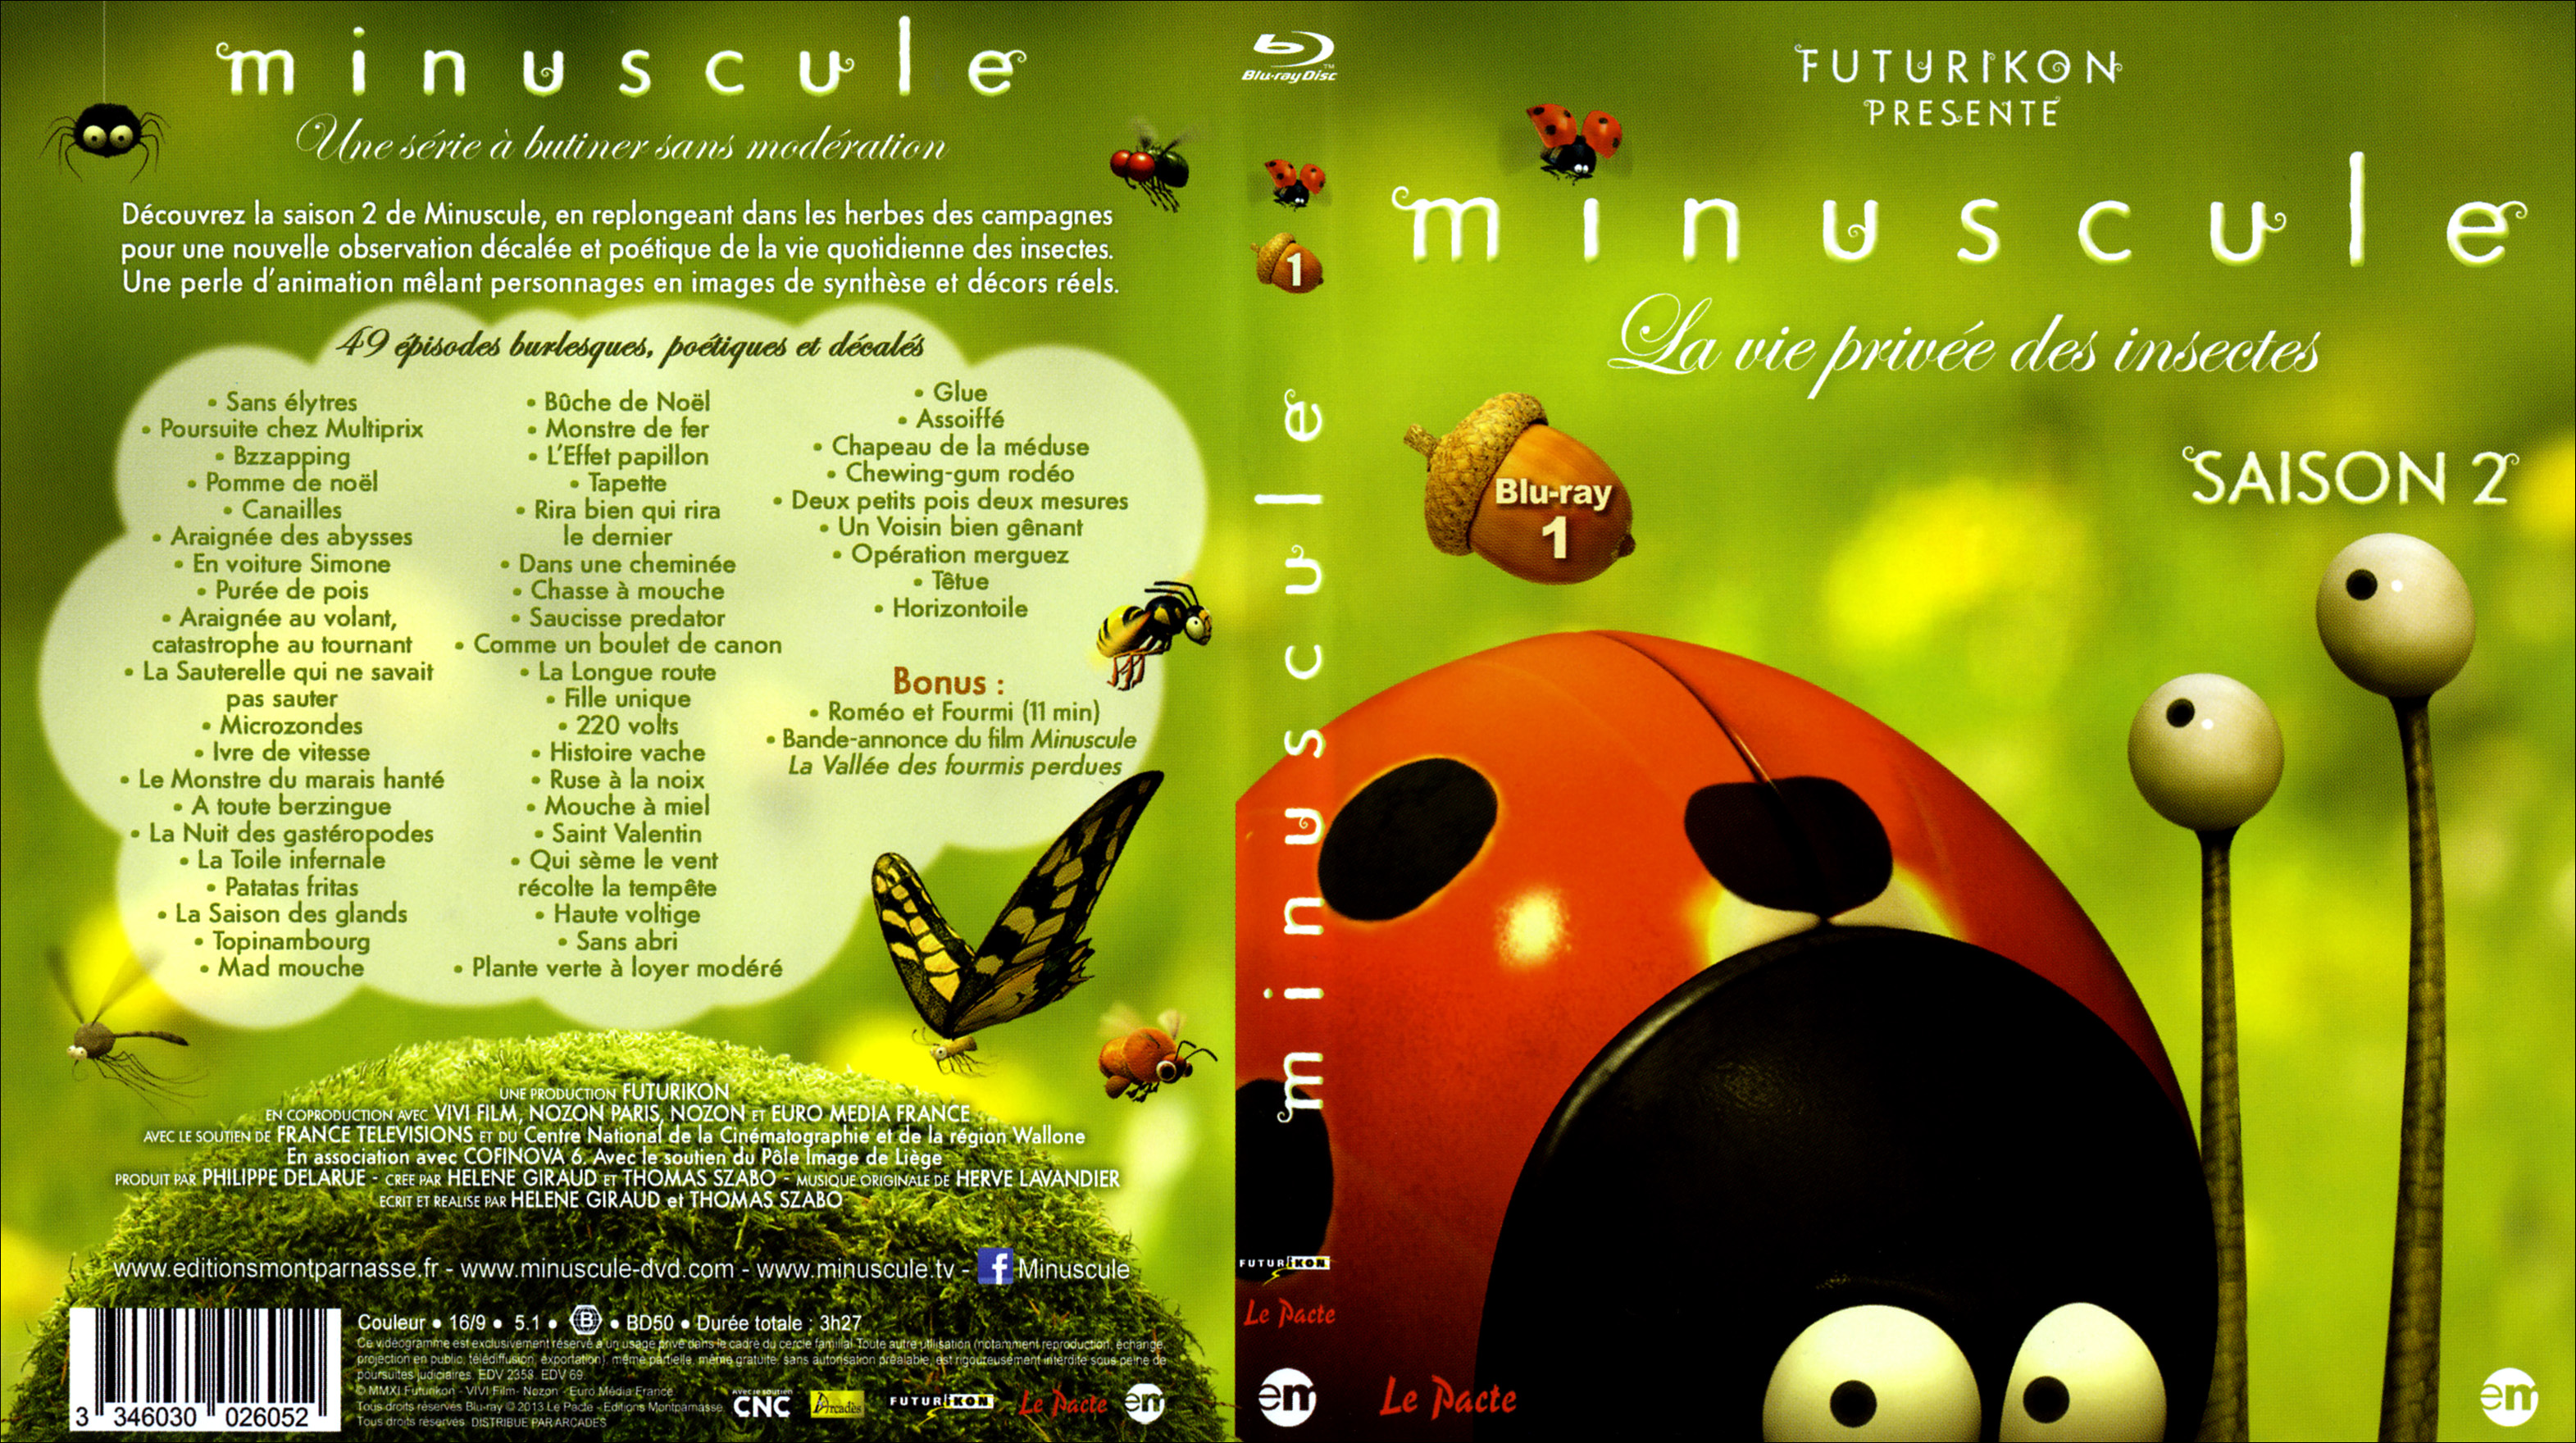 Jaquette DVD Minuscule Saison 2 DISC 1 (BLU-RAY)